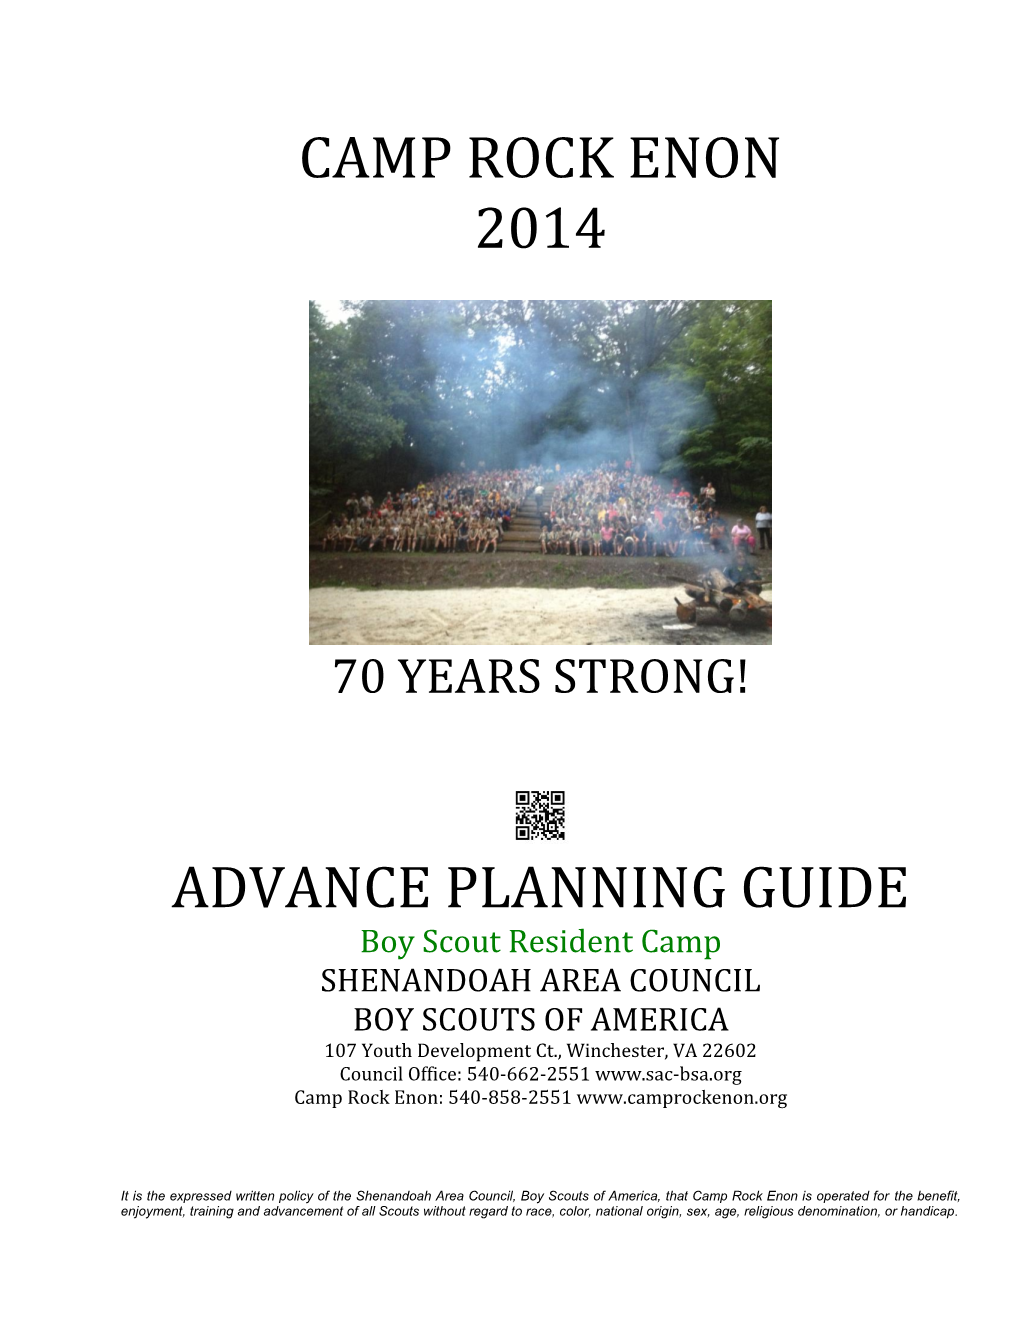 Camp Rock Enon 2014